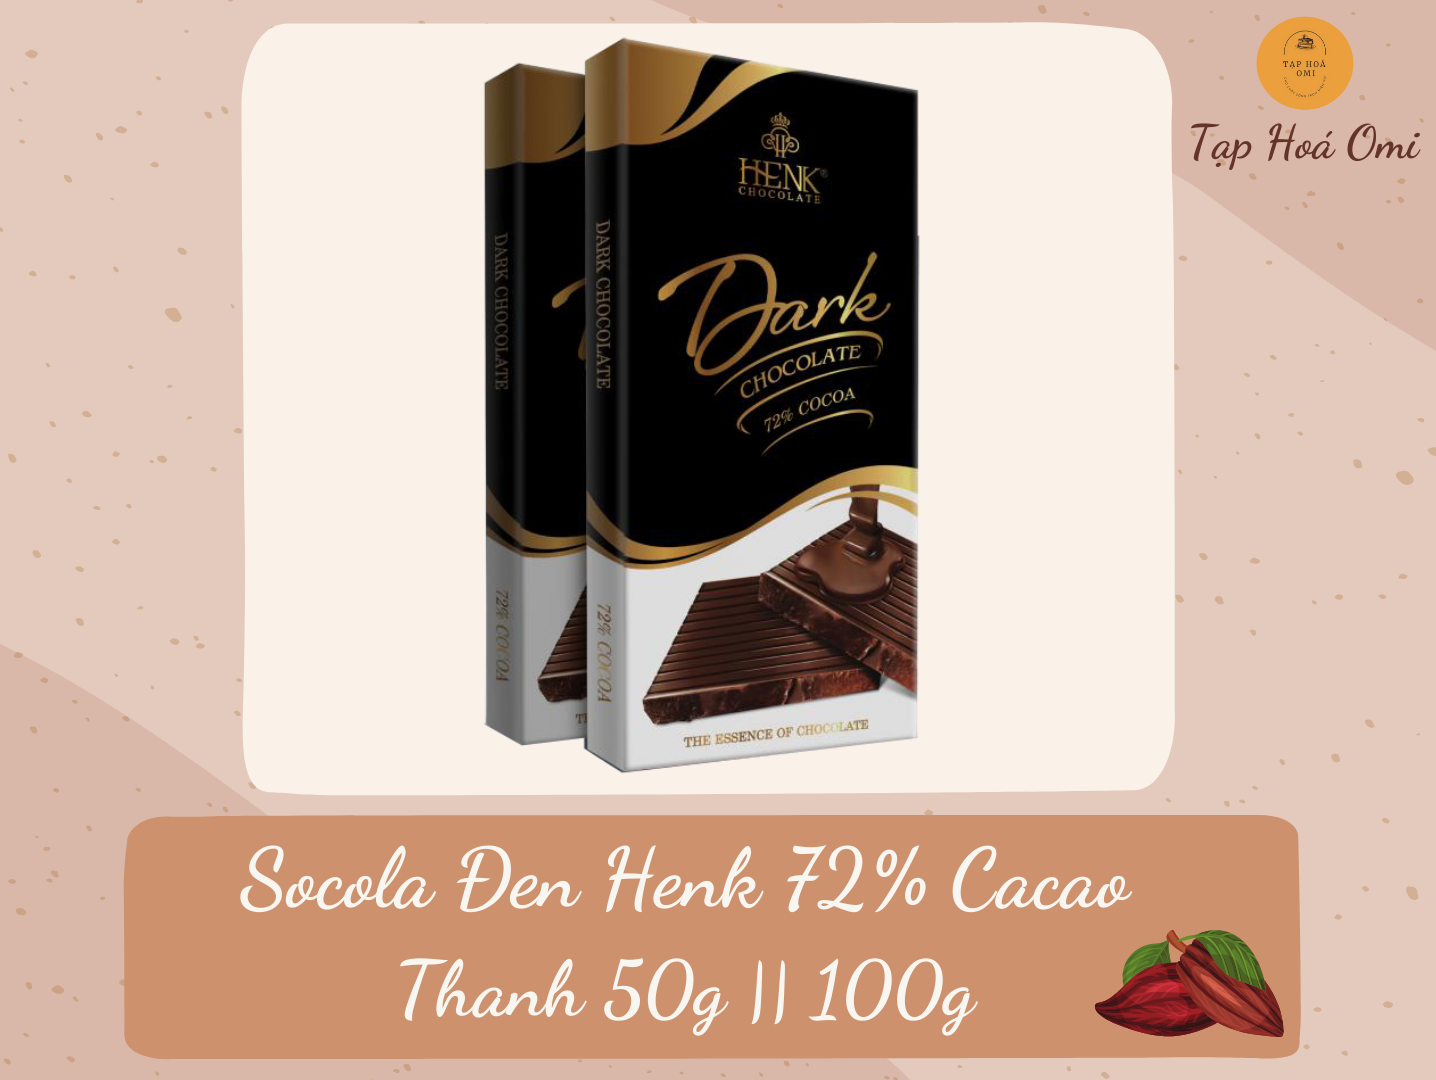 Socola đen 72% cacao thanh 50g || 100g